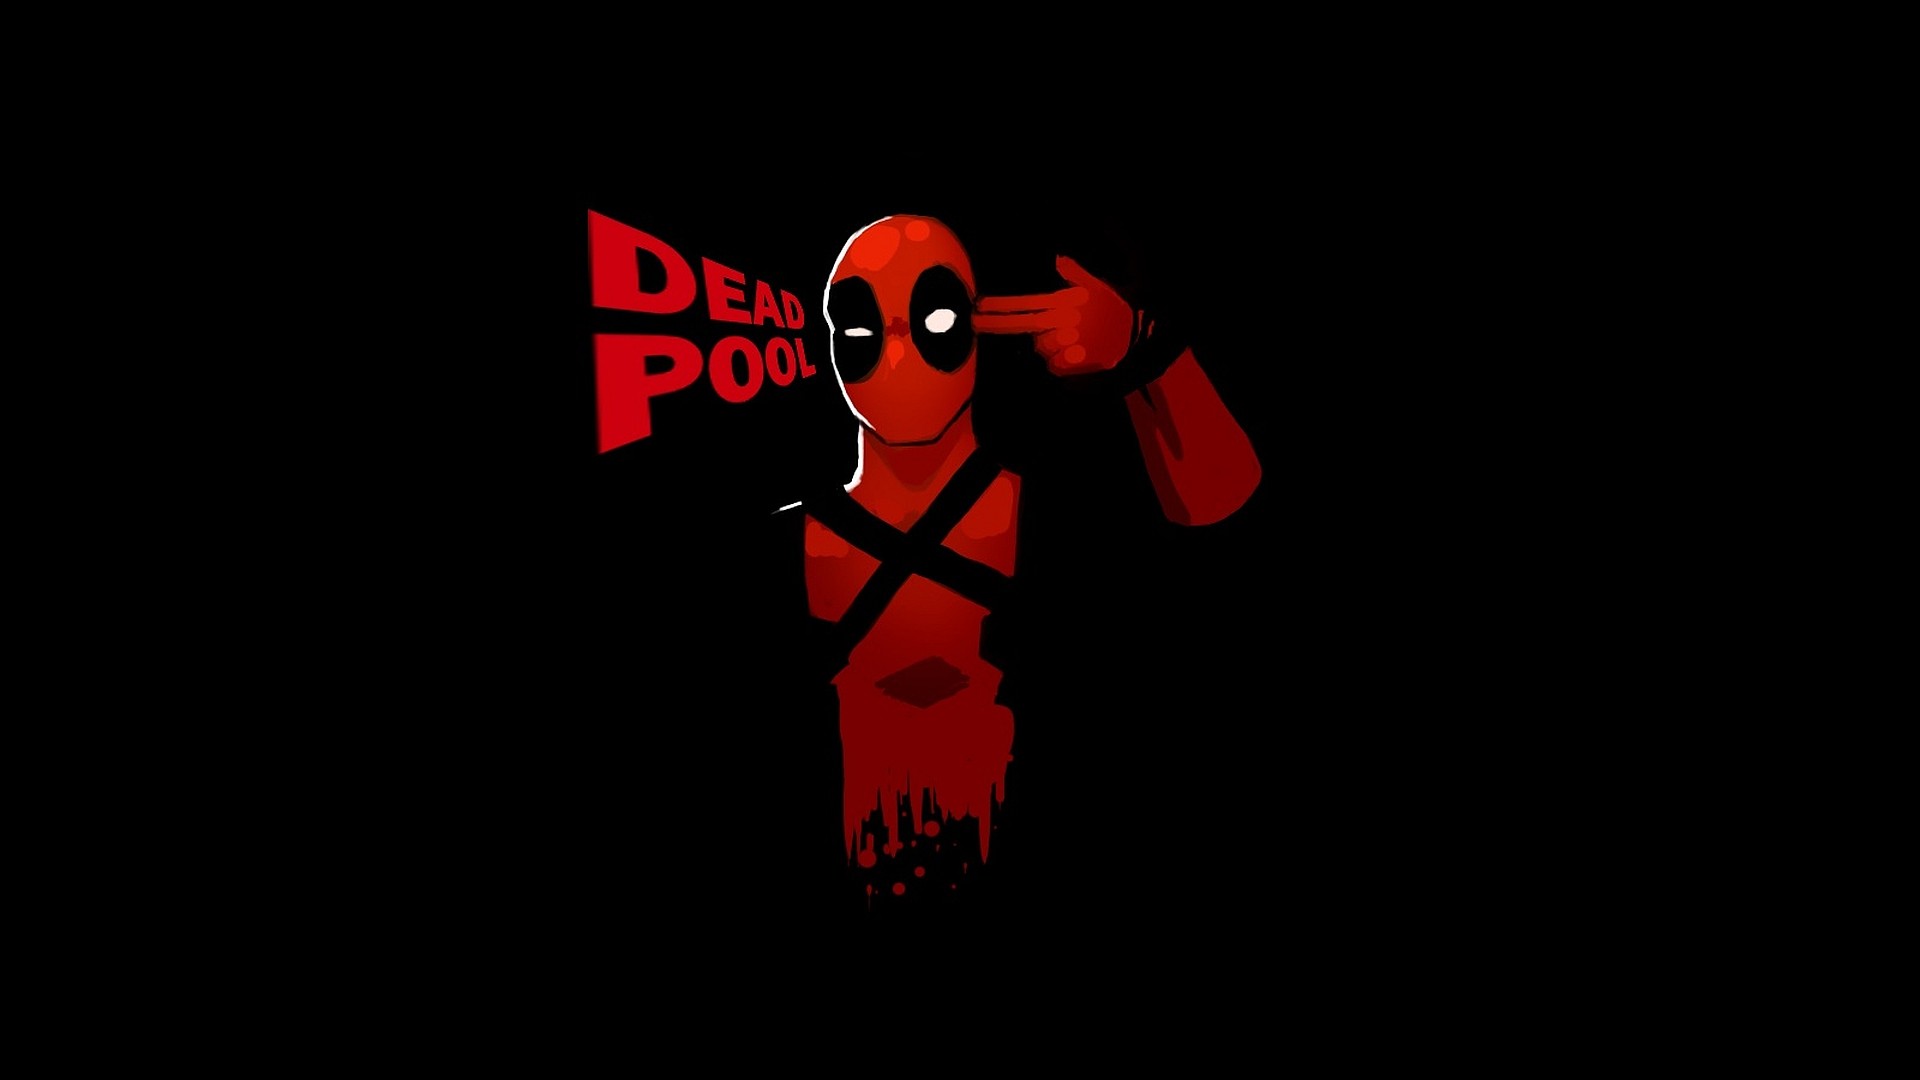  Deadpool  wallpaper  HD  1080p   Download free stunning HD  